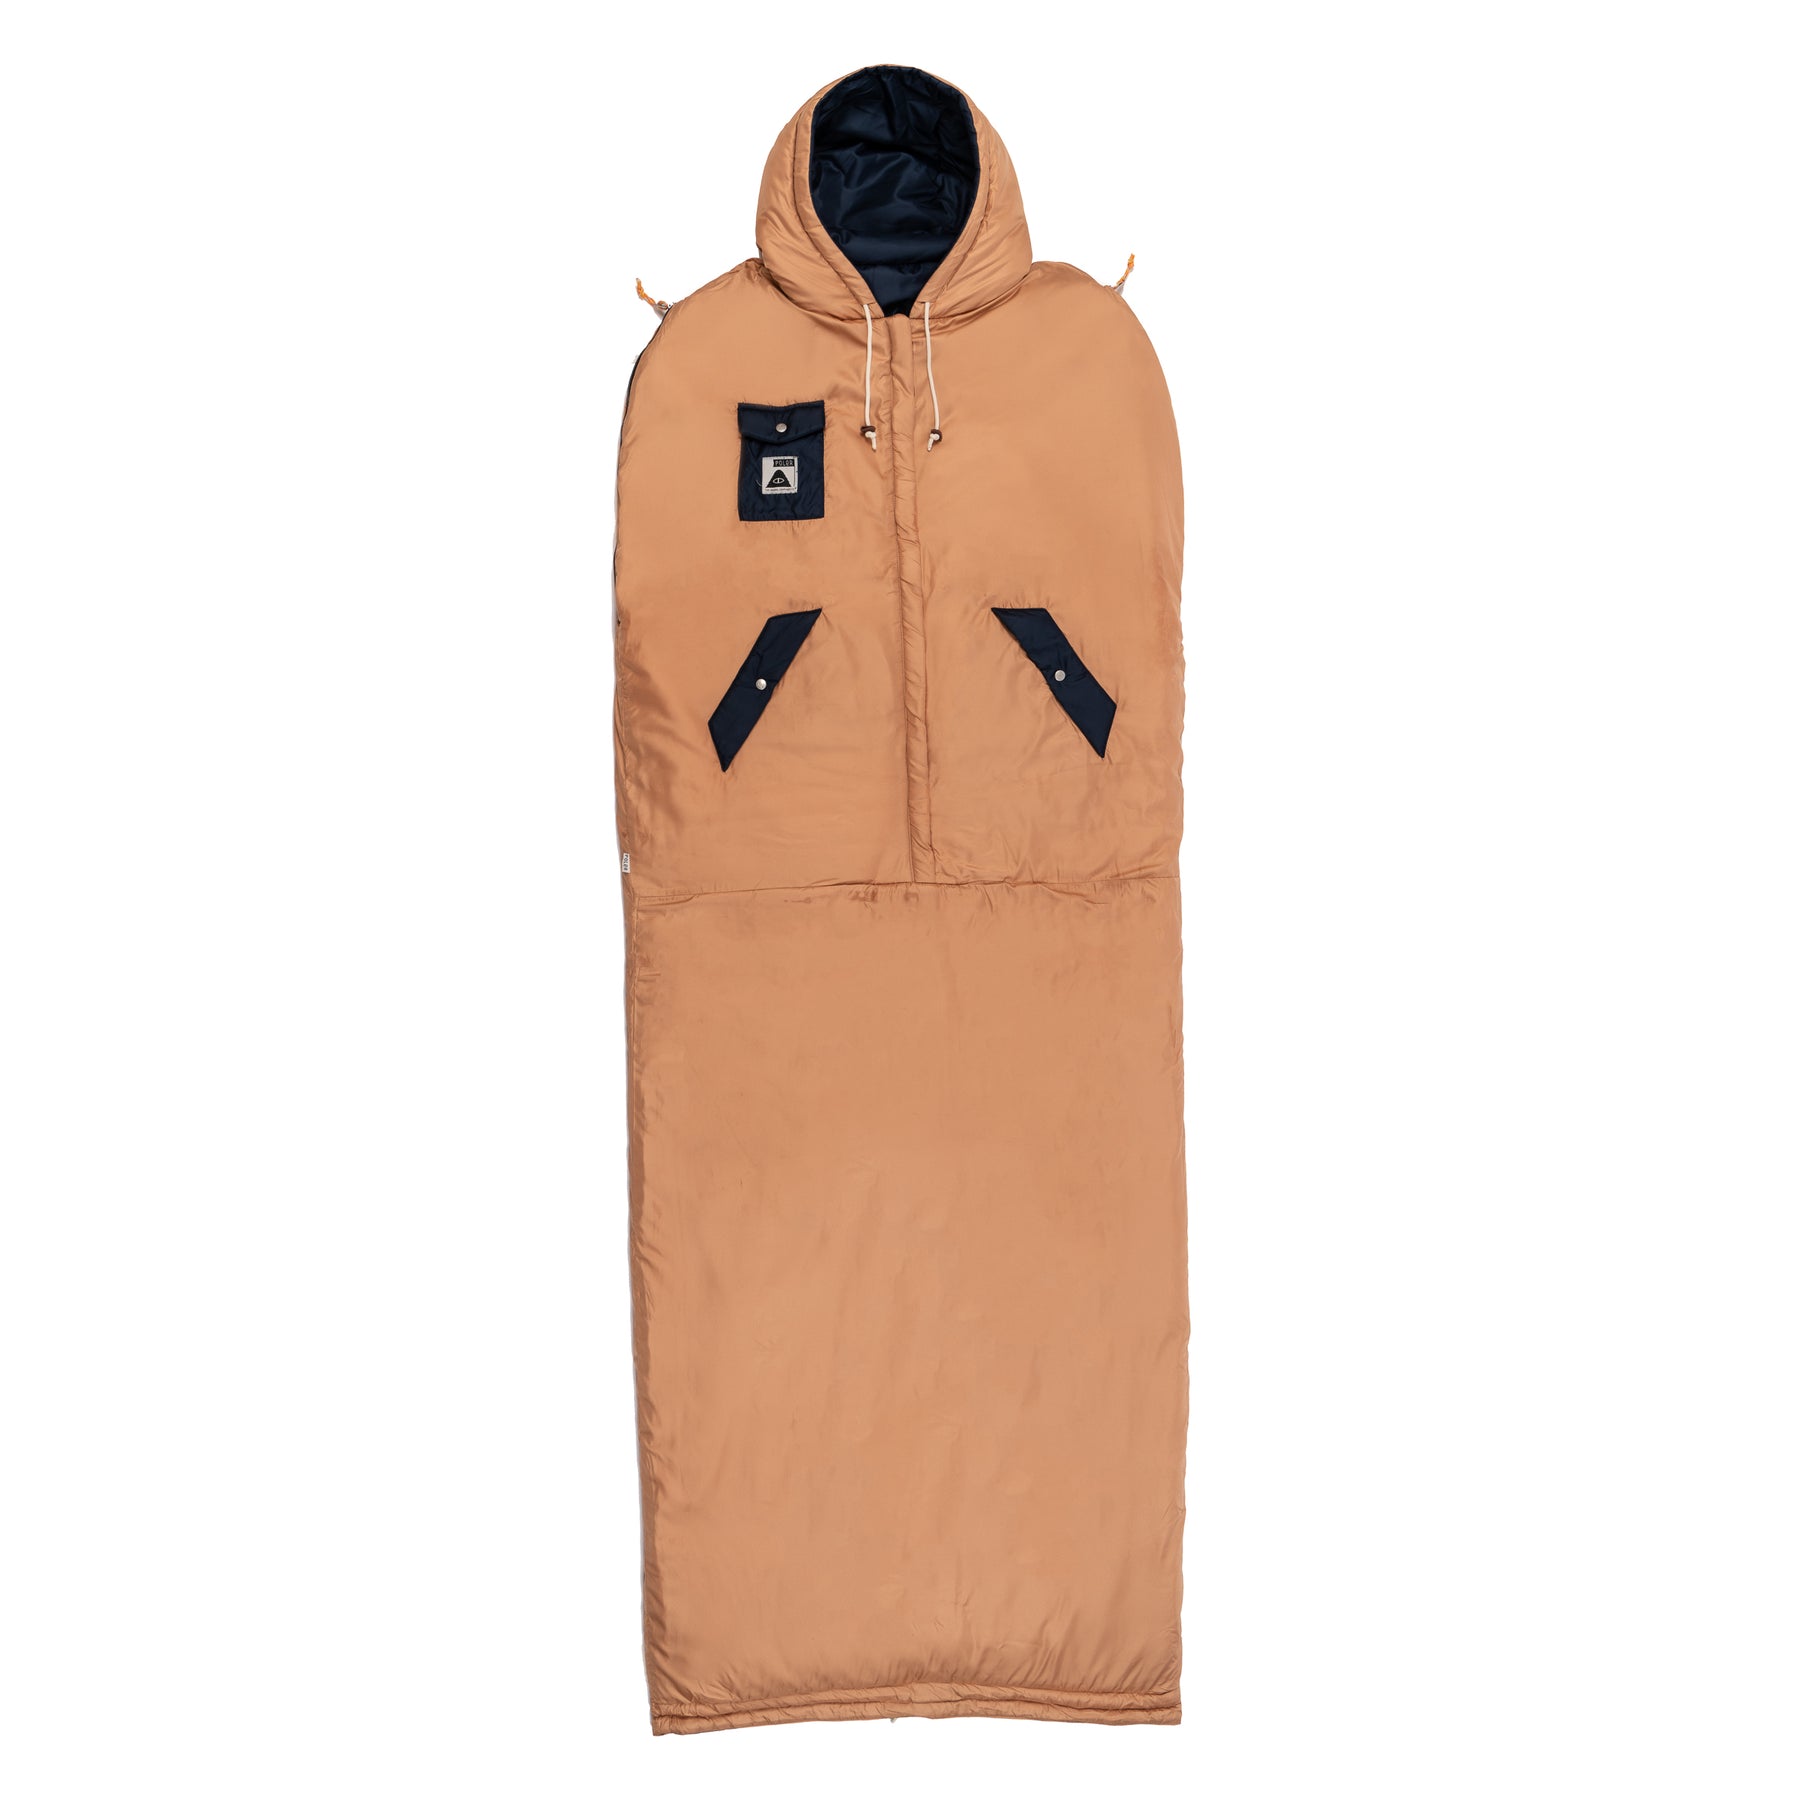 Napsacks, Convertible, Wearable Sleeping Bag Jacket